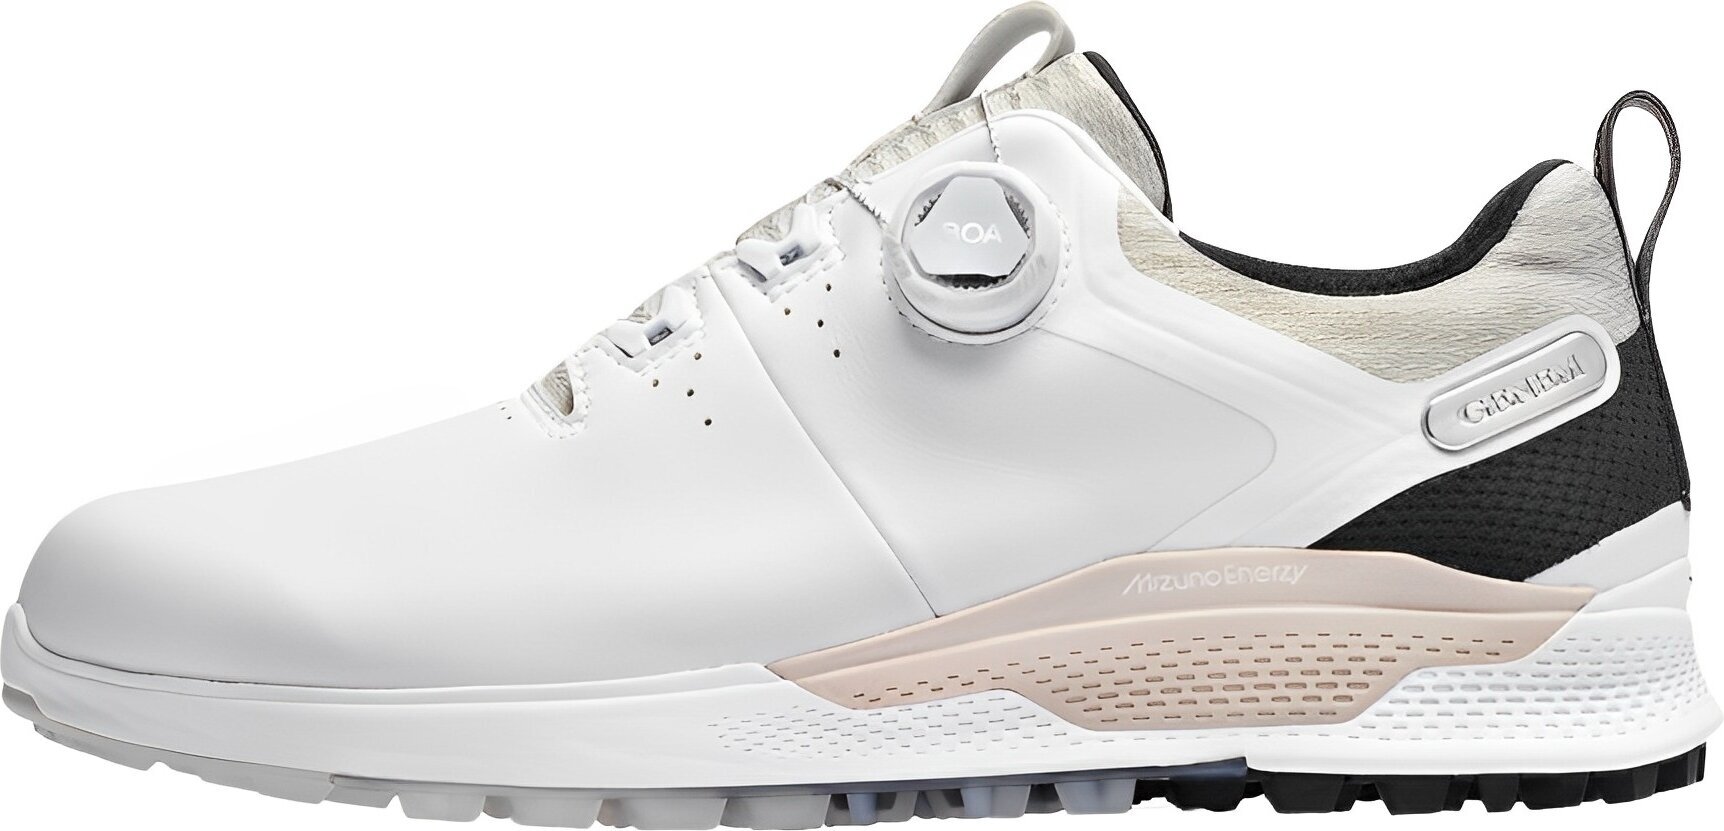 Chaussures de golf pour hommes Mizuno Genem WG Boa White/Black 44